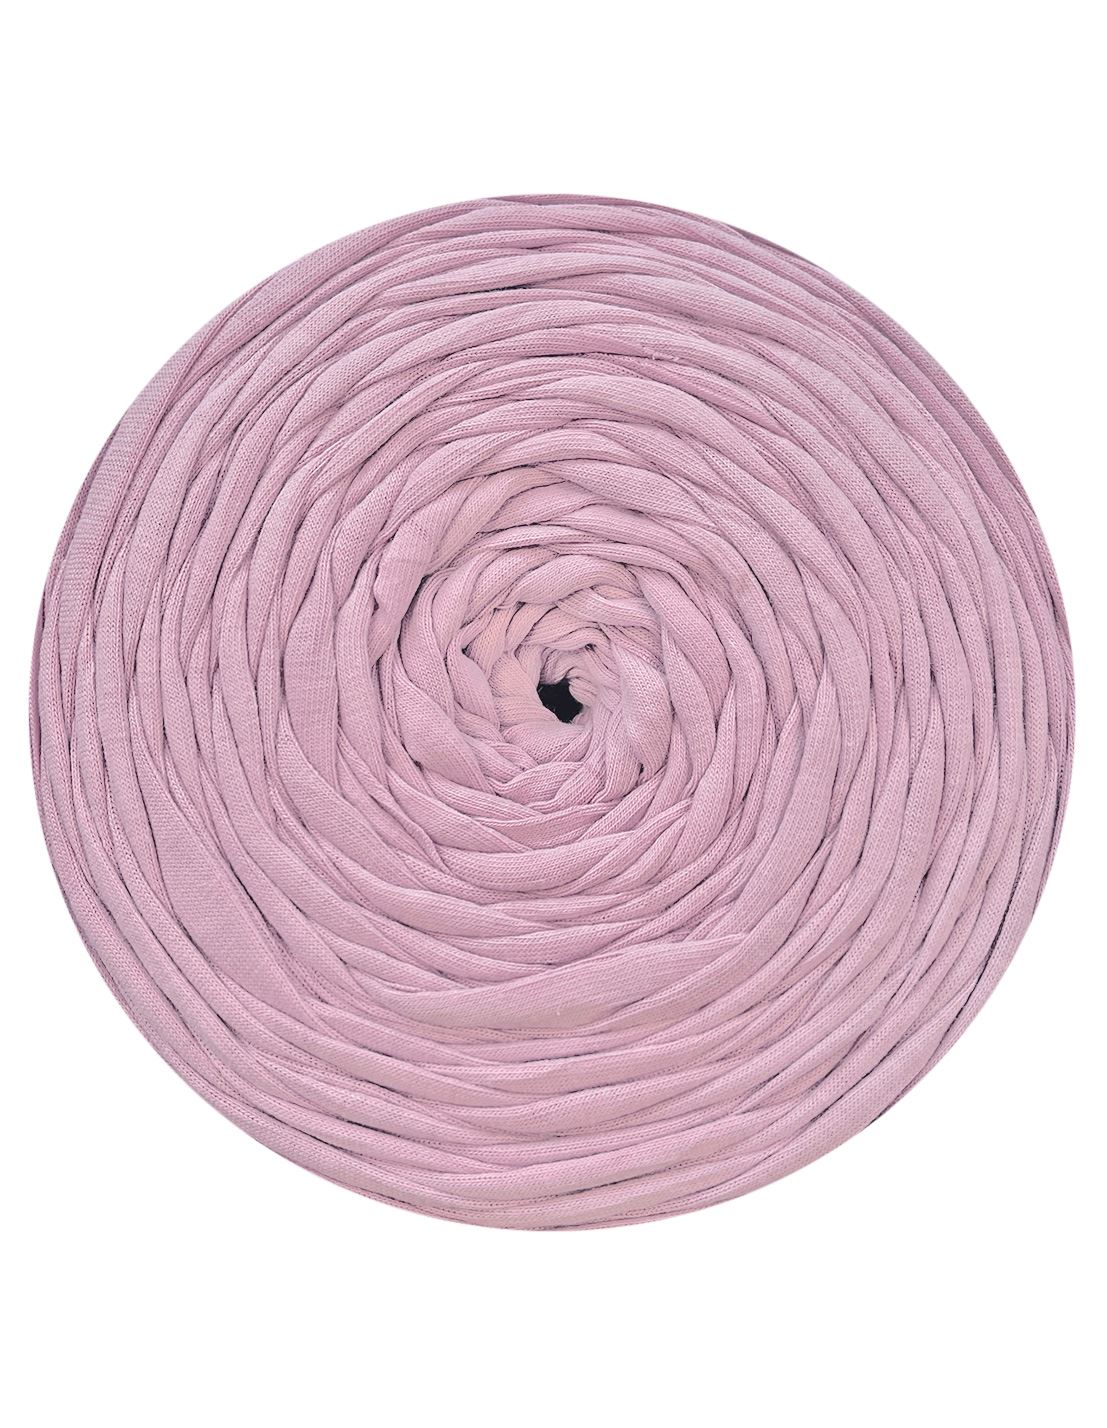 Pale taffy pink t-shirt yarn (100-120m)